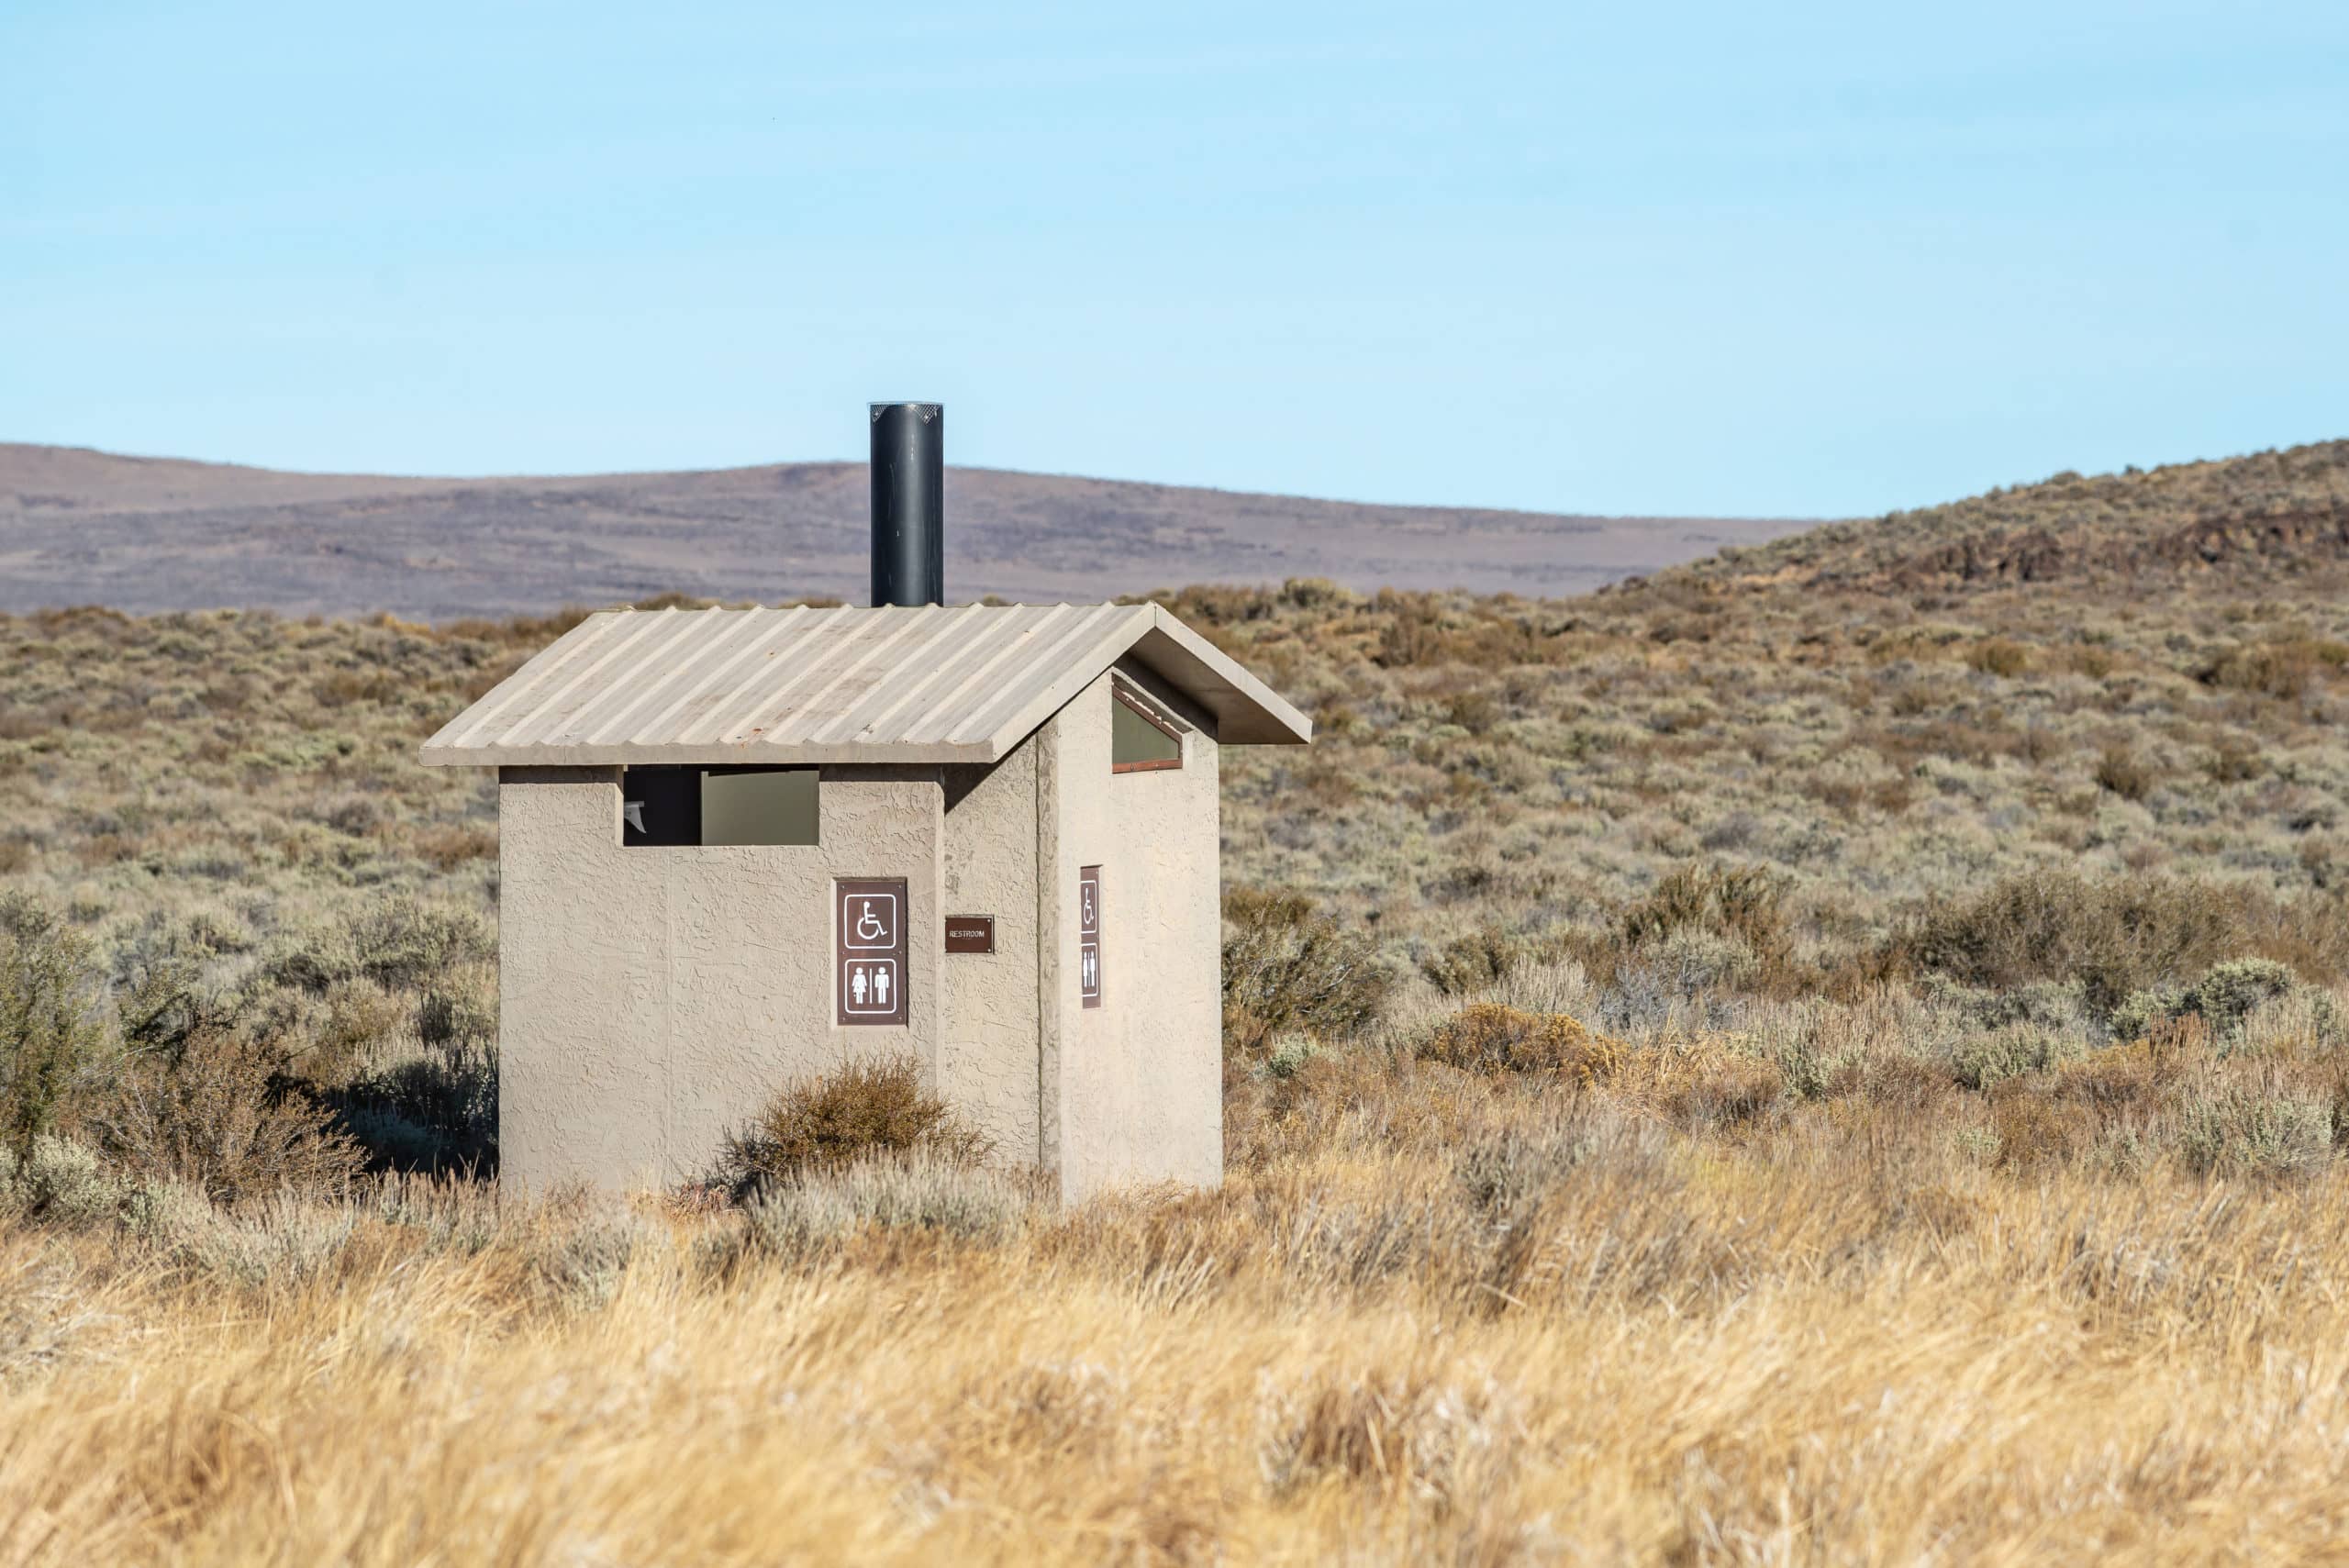 vault Toilet Unisex Restroom Outdoors at Sheldon National Wildlife Refuge.